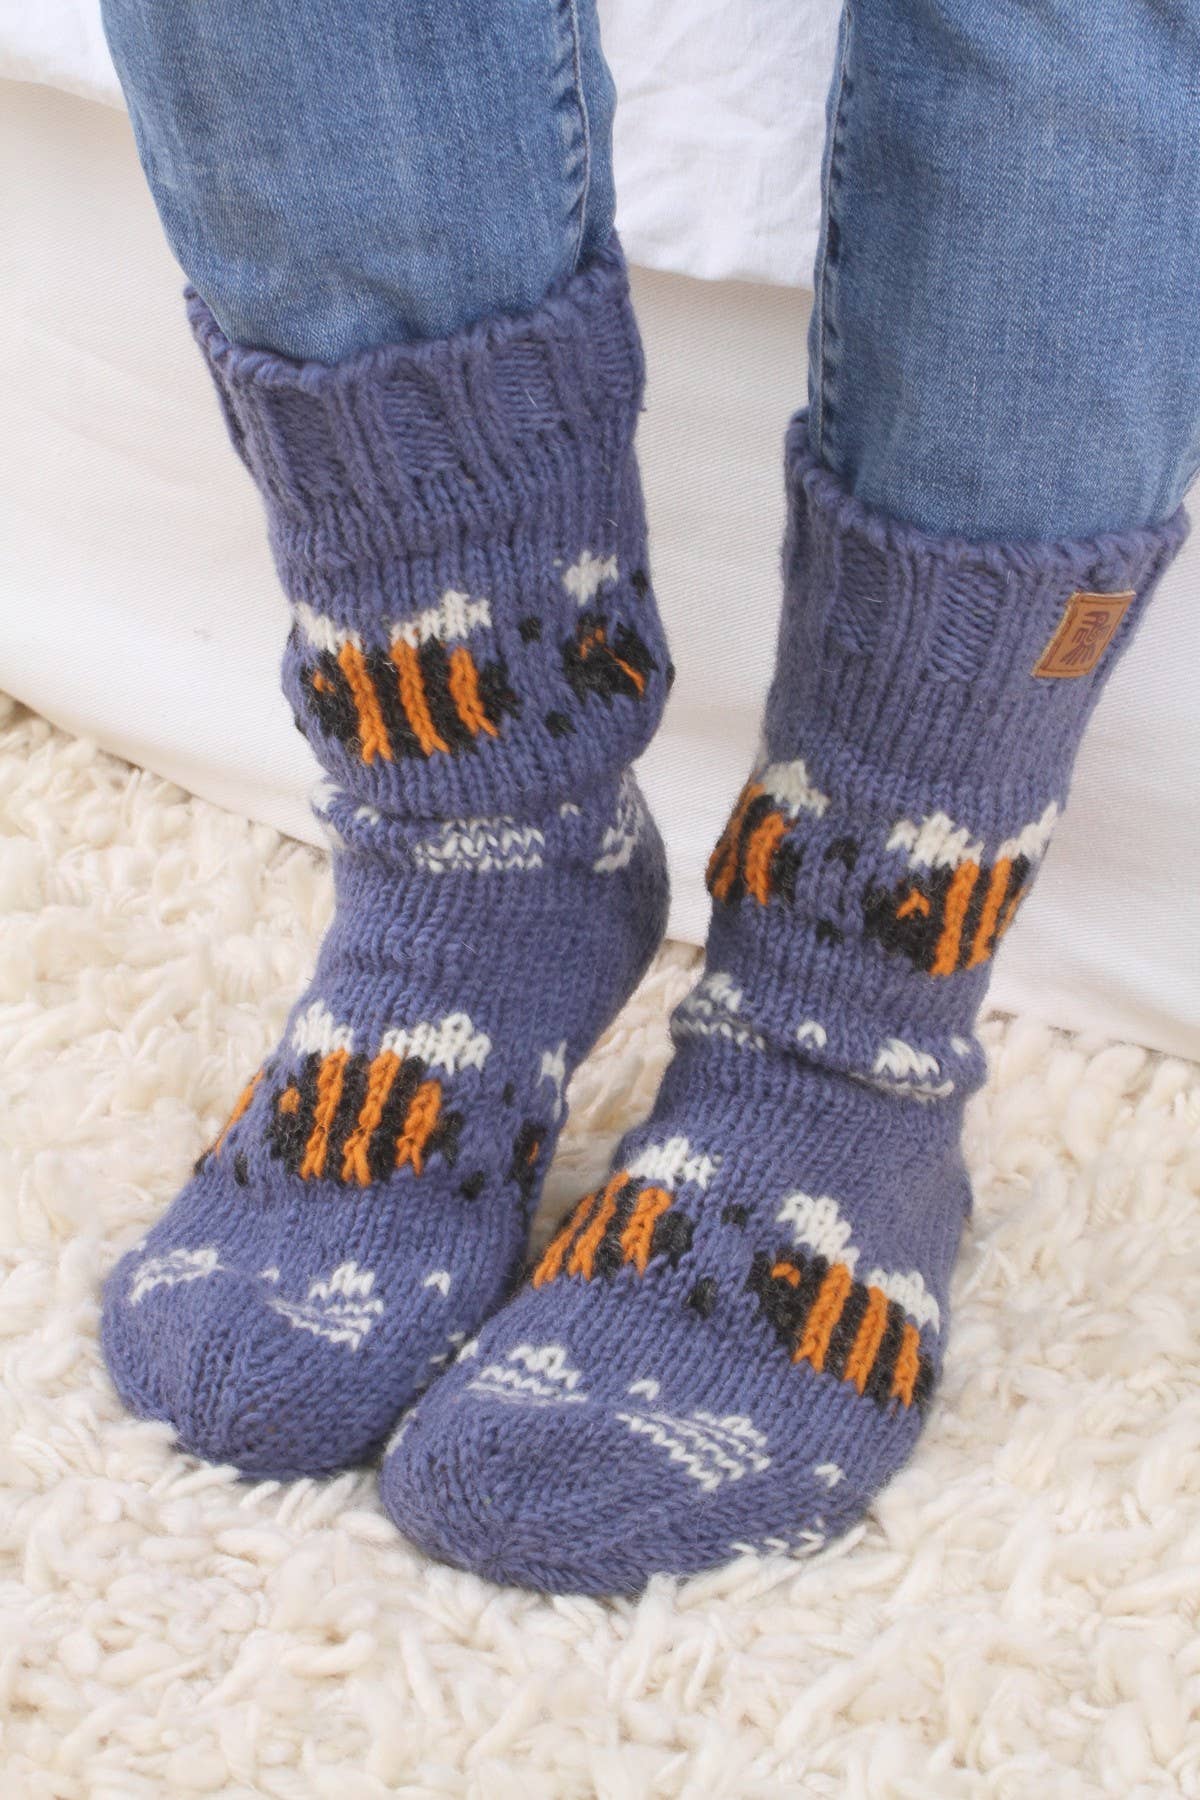 Beehive Sofa Socks Denim: One Colour